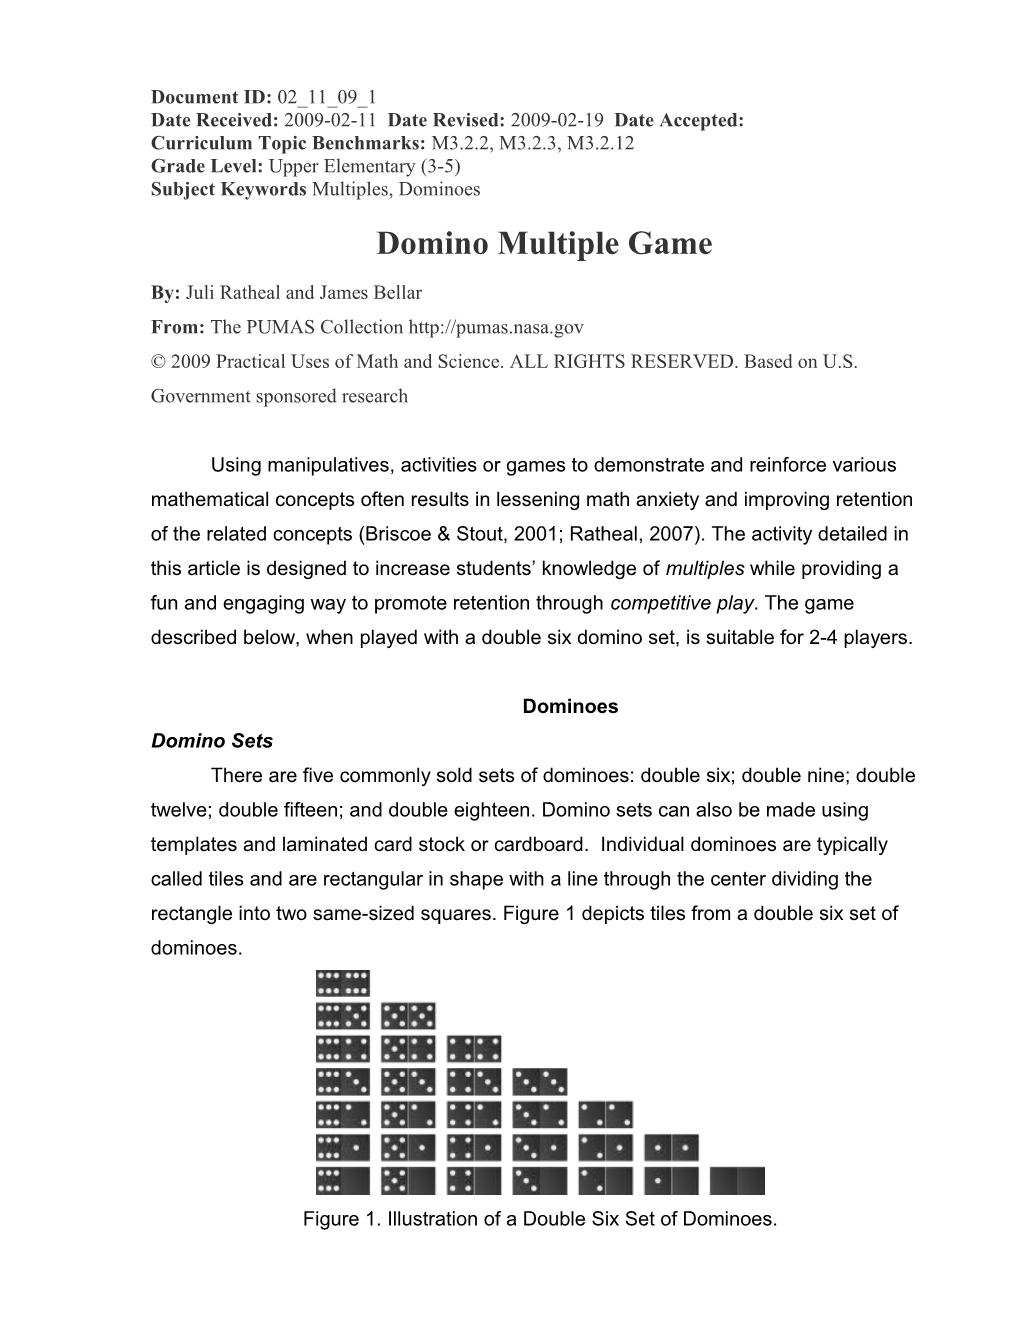 Domino Multiple Game